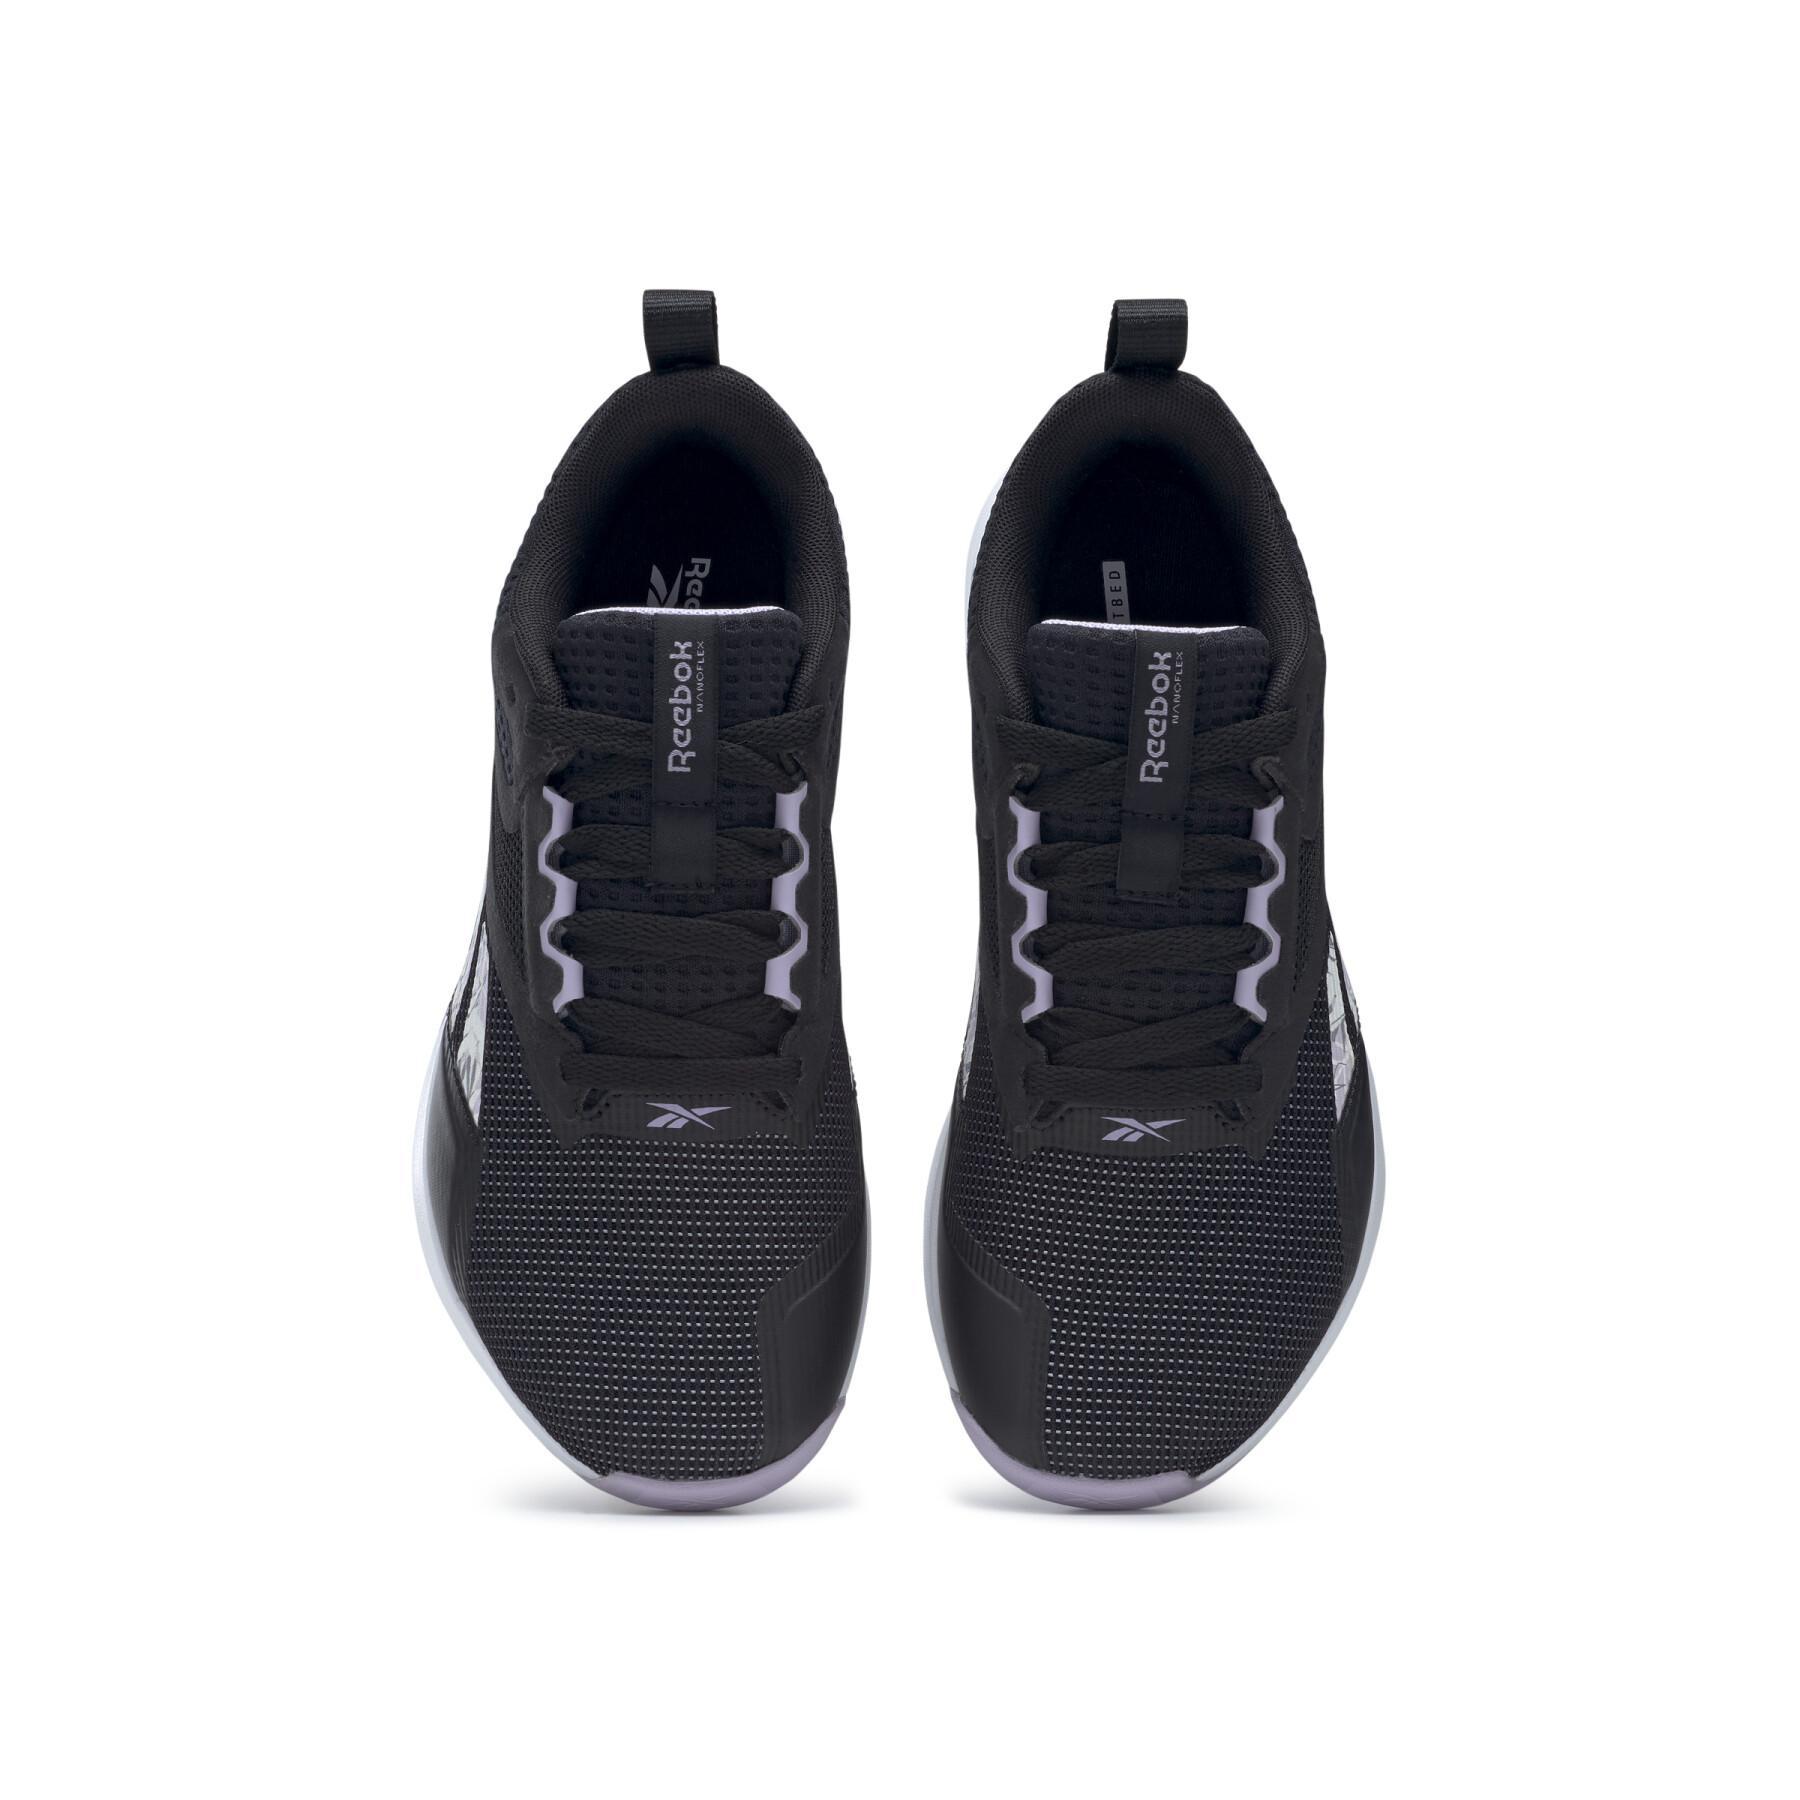 Chaussures de cross training Damen Reebok Nanoflex Tr V2